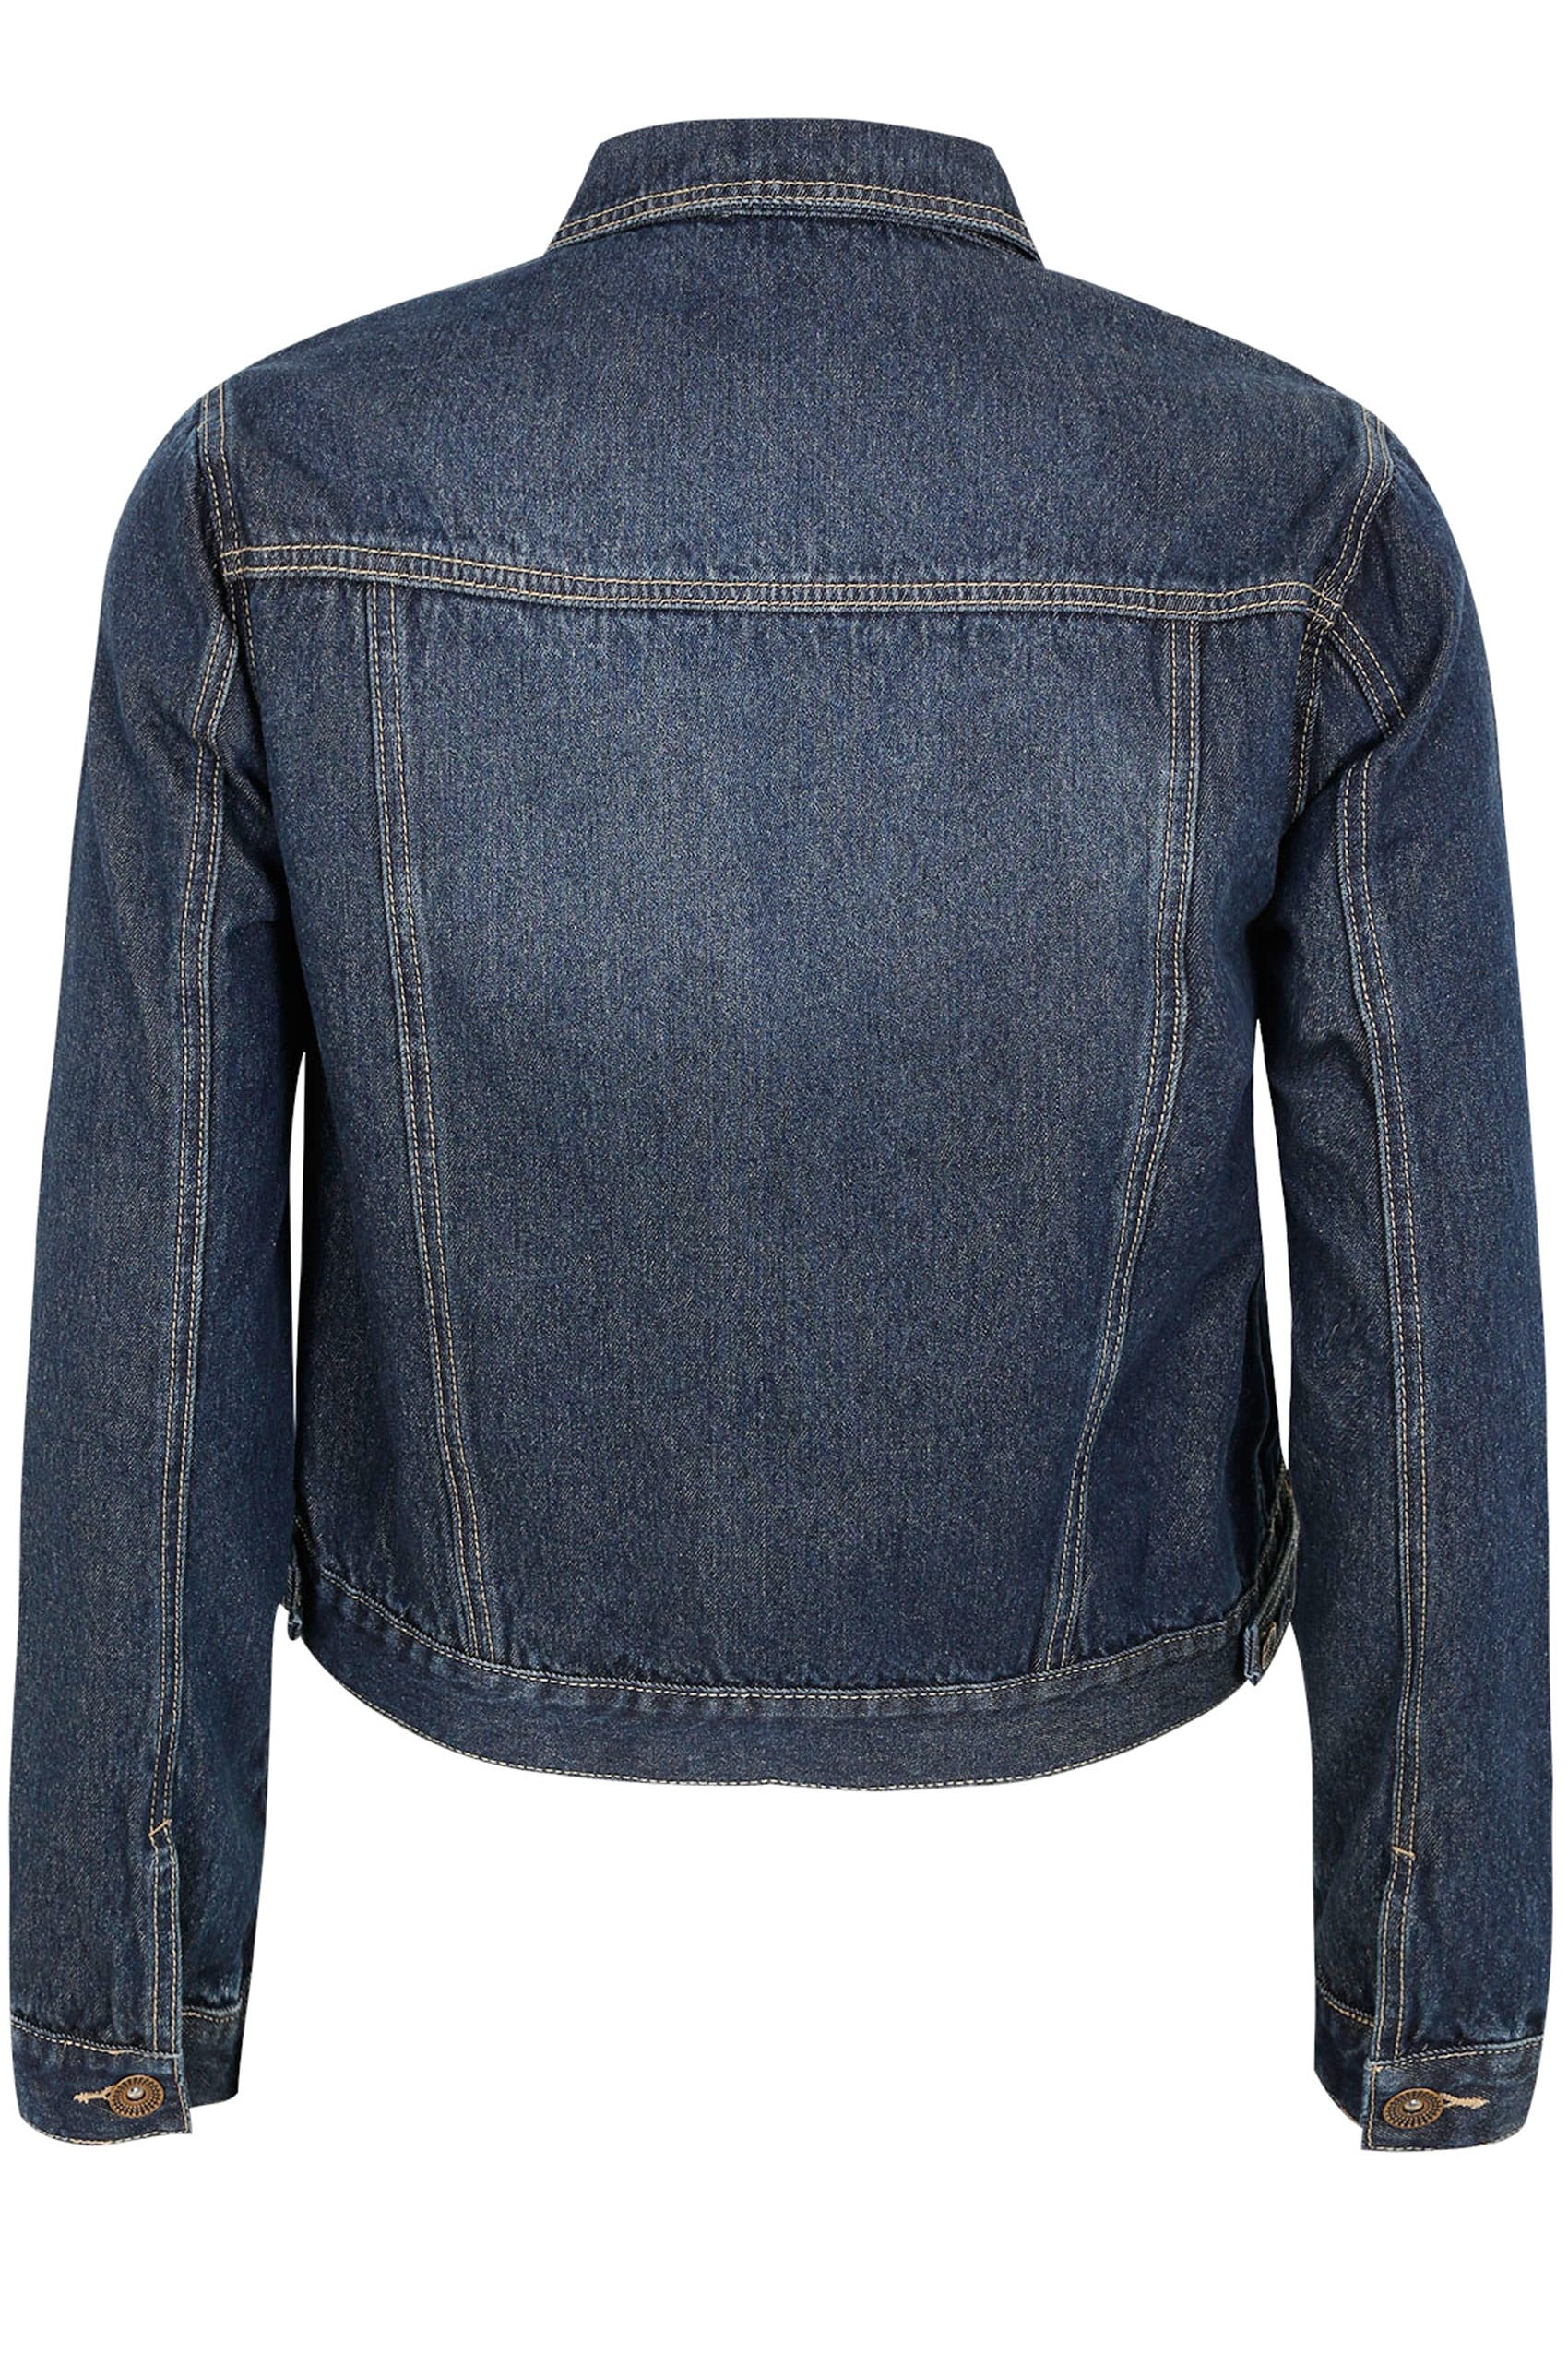 Dark Blue Washed Denim Jacket, plus size 16 to 36